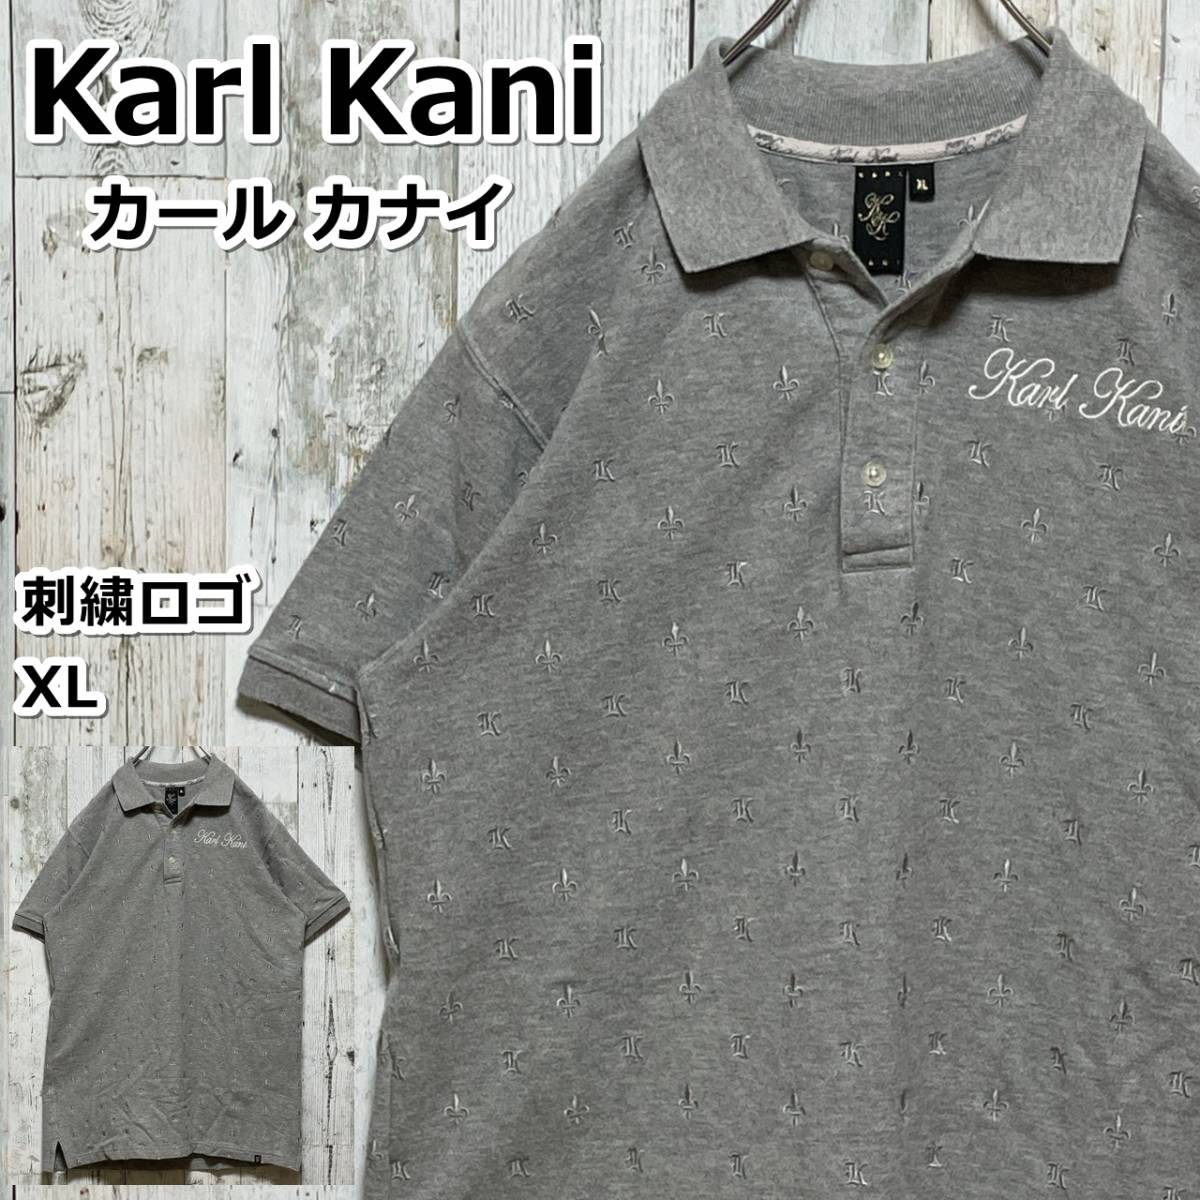 Karl Kani カールカナイ 刺繍ロゴ バックロゴ XL 半袖ポロシャツ XLサイズ以上